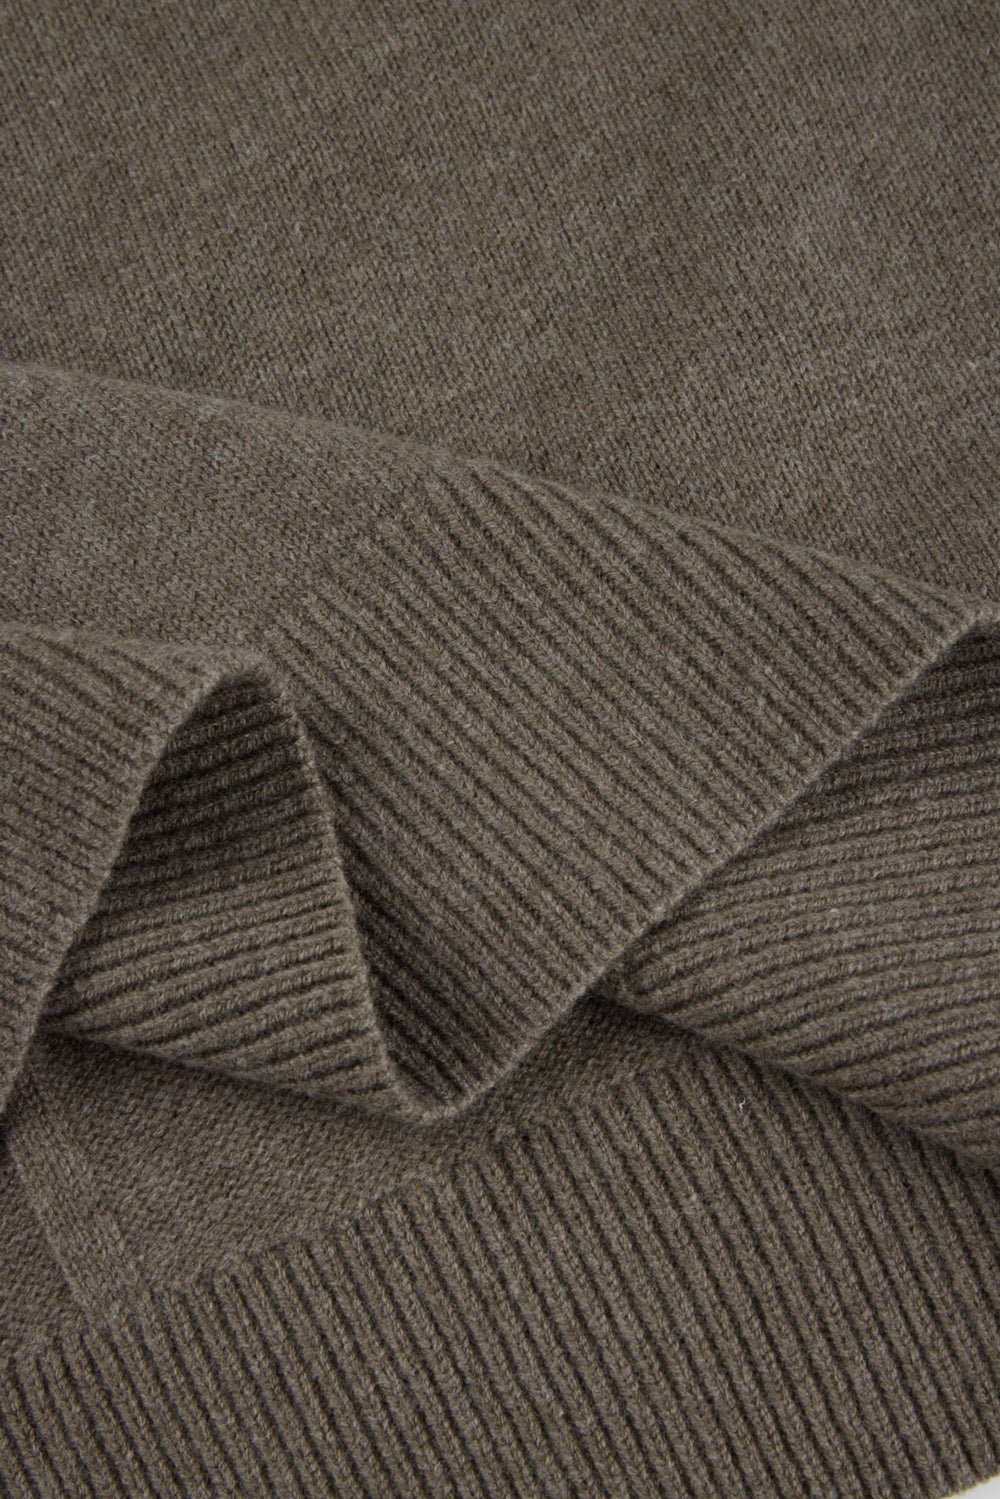 AMHERSET 2.0 v- neck wool pullover (Mocha) - STELLAM